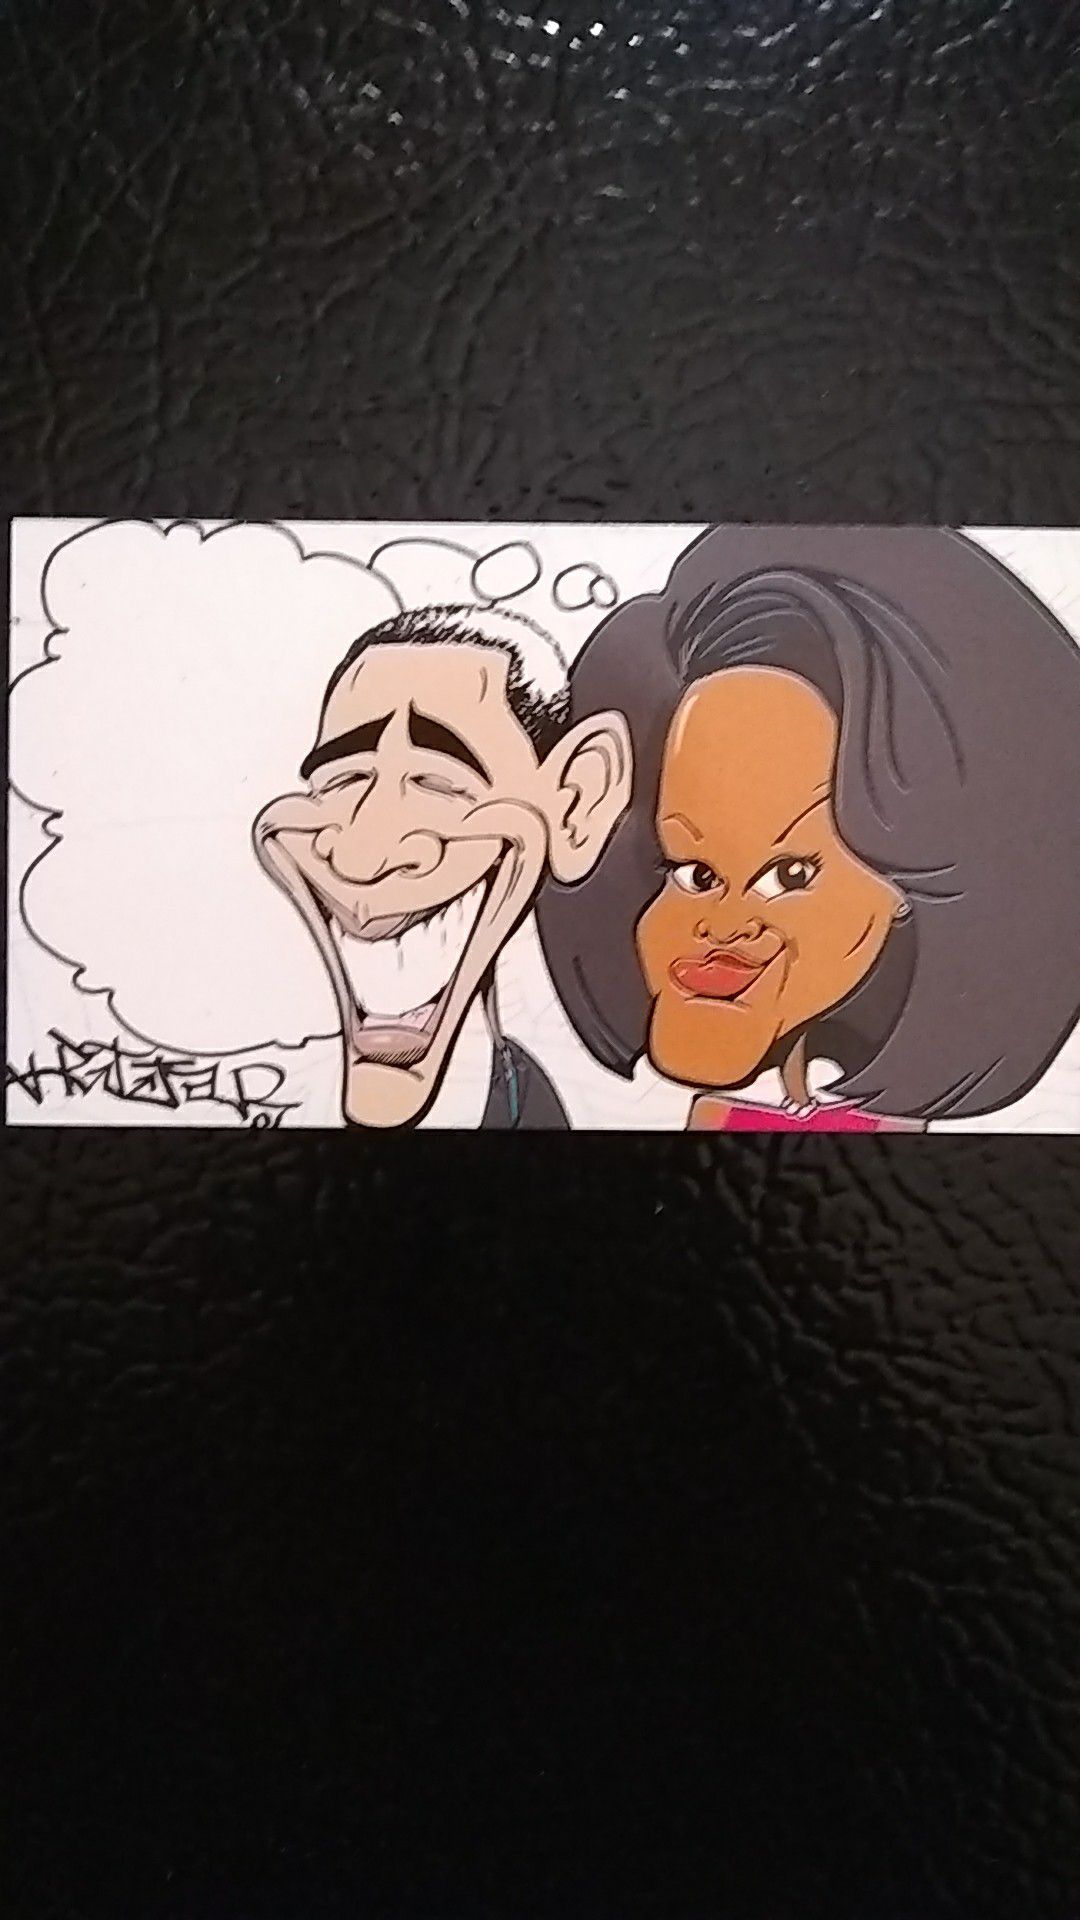 Obama magnet, cartoon caricature